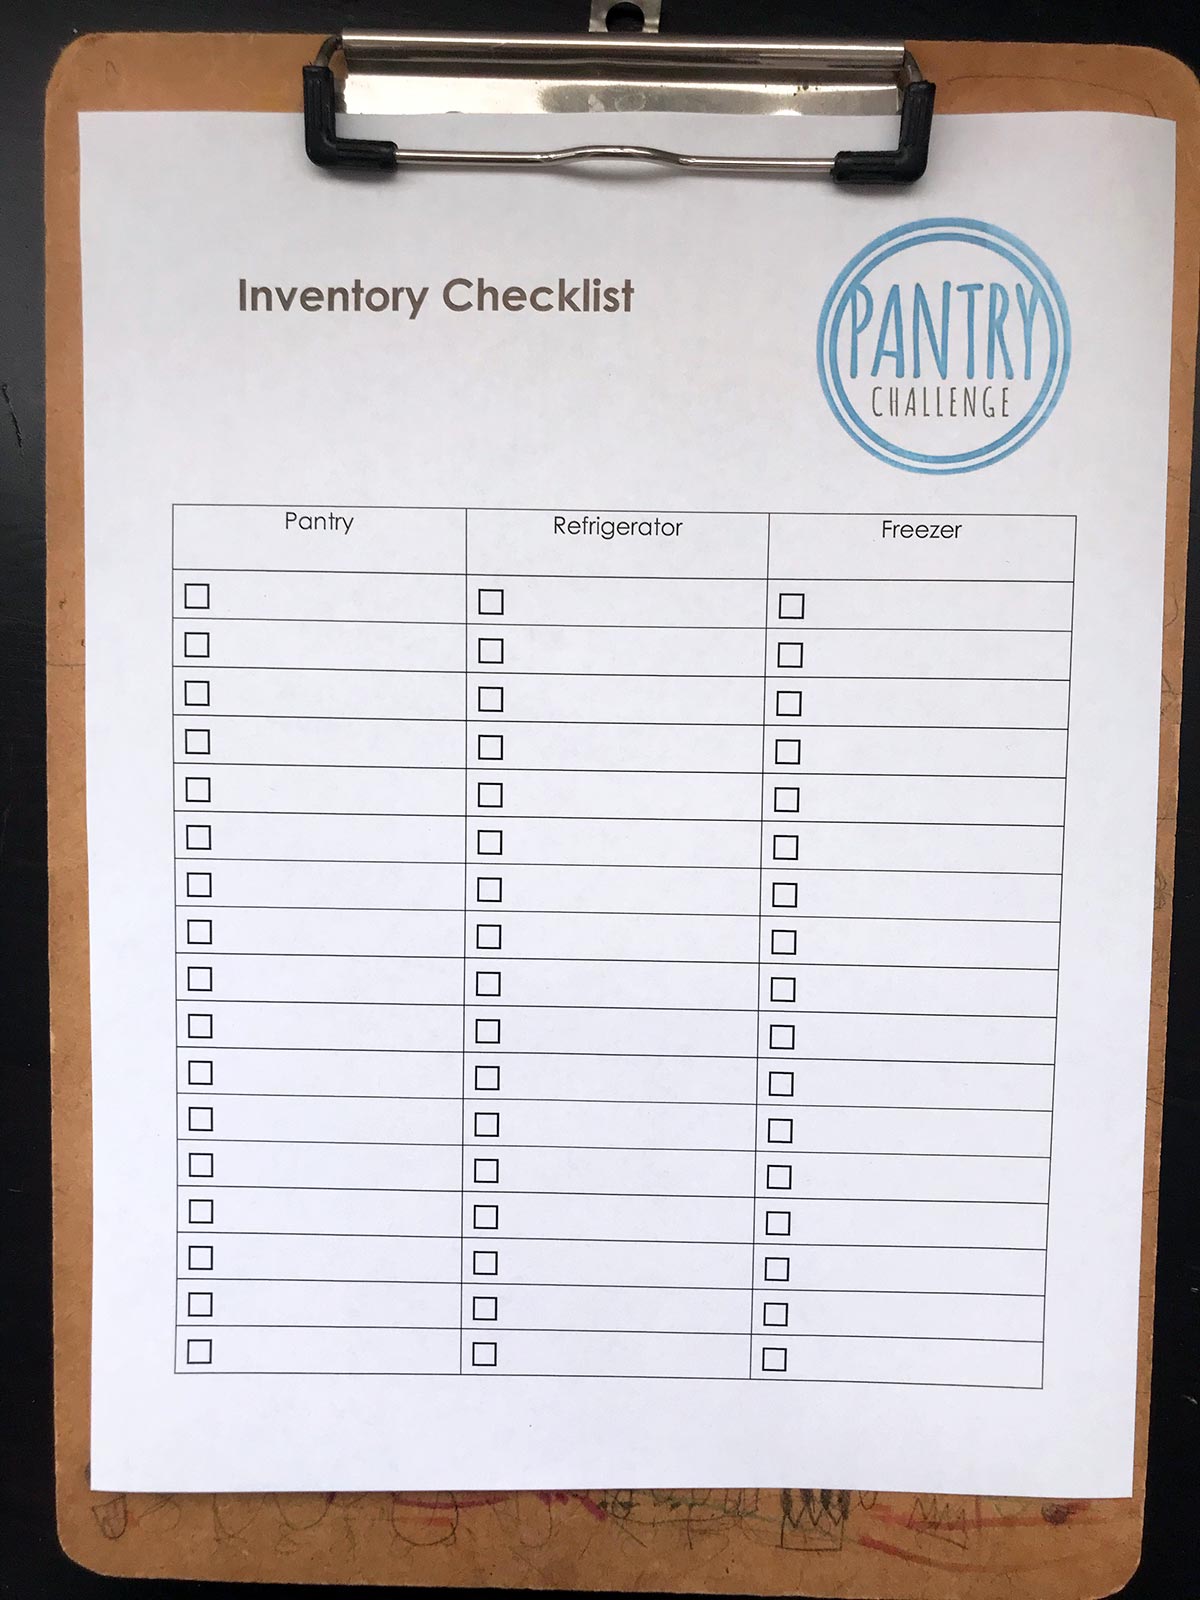 pantry challenge inventory worksheet on clipboard